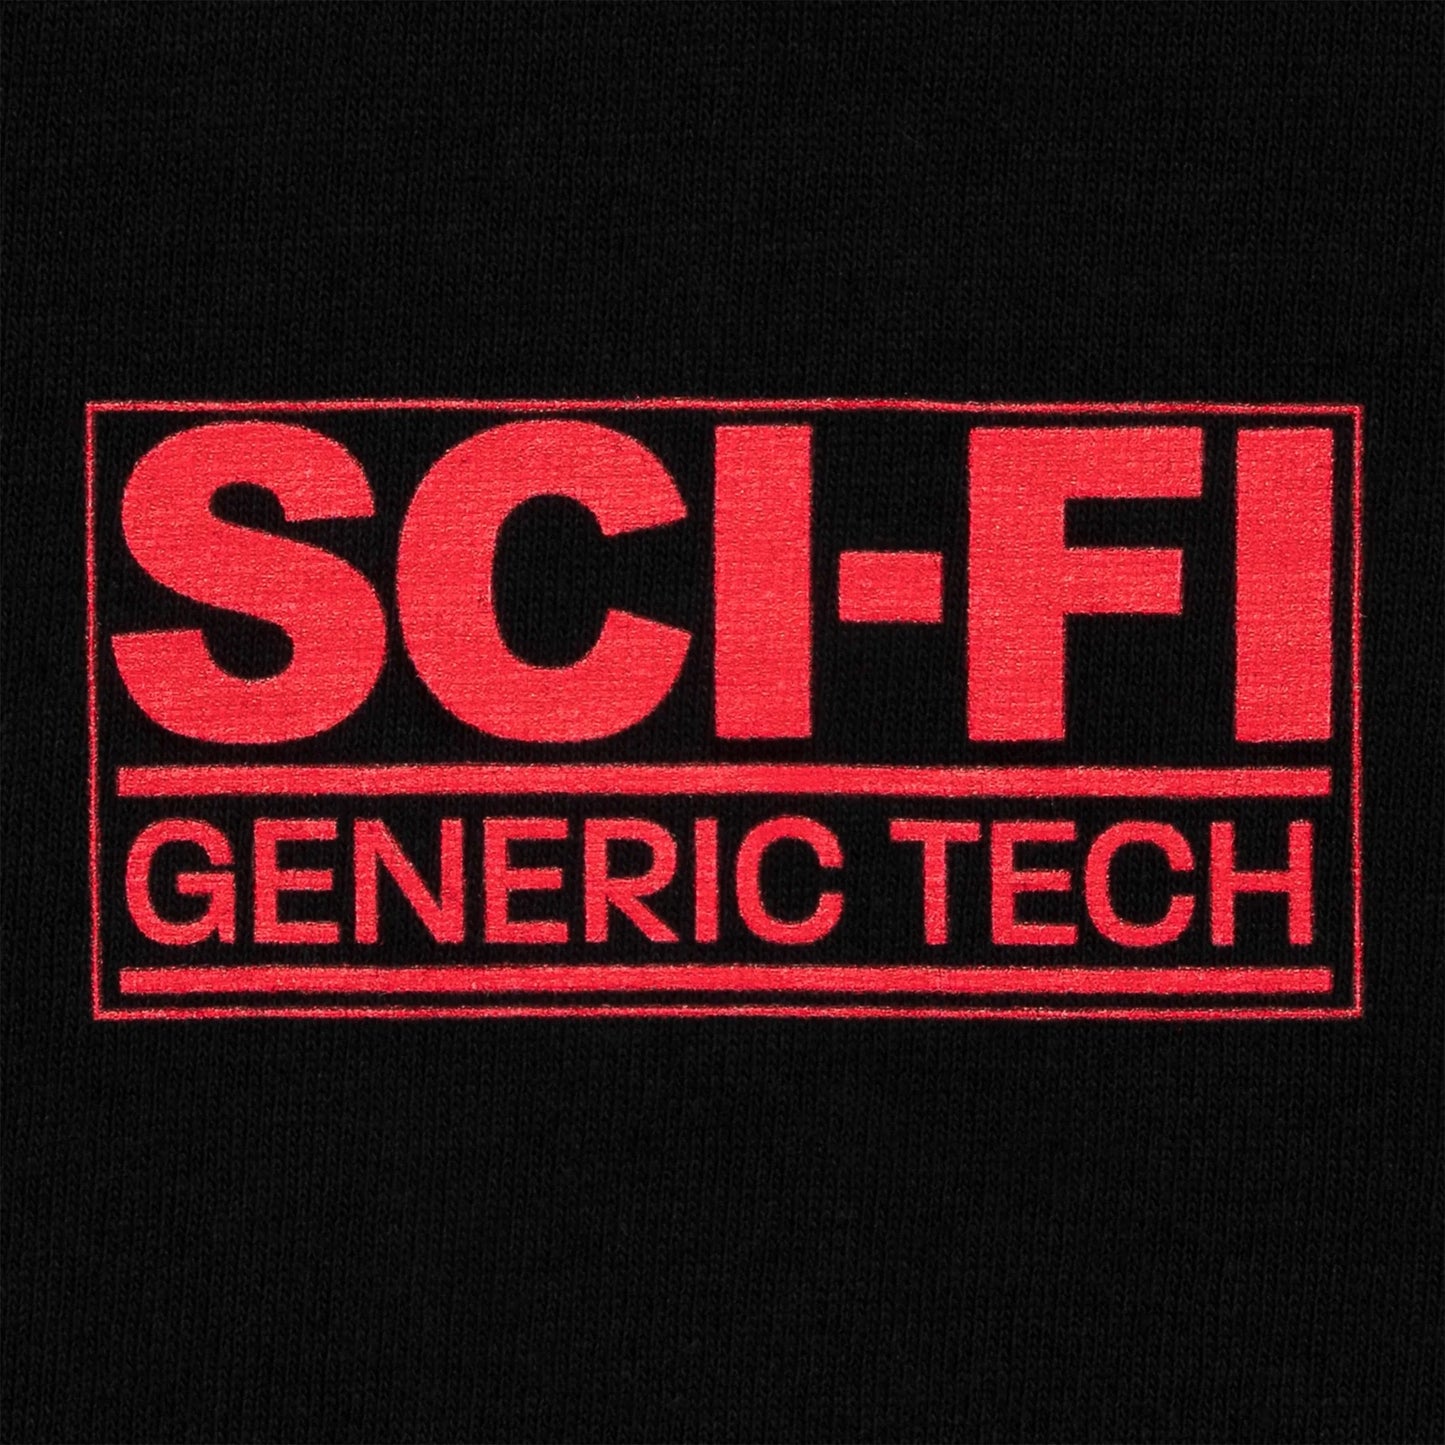 Sci-Fi Fantasy Generic Tech Tee Black